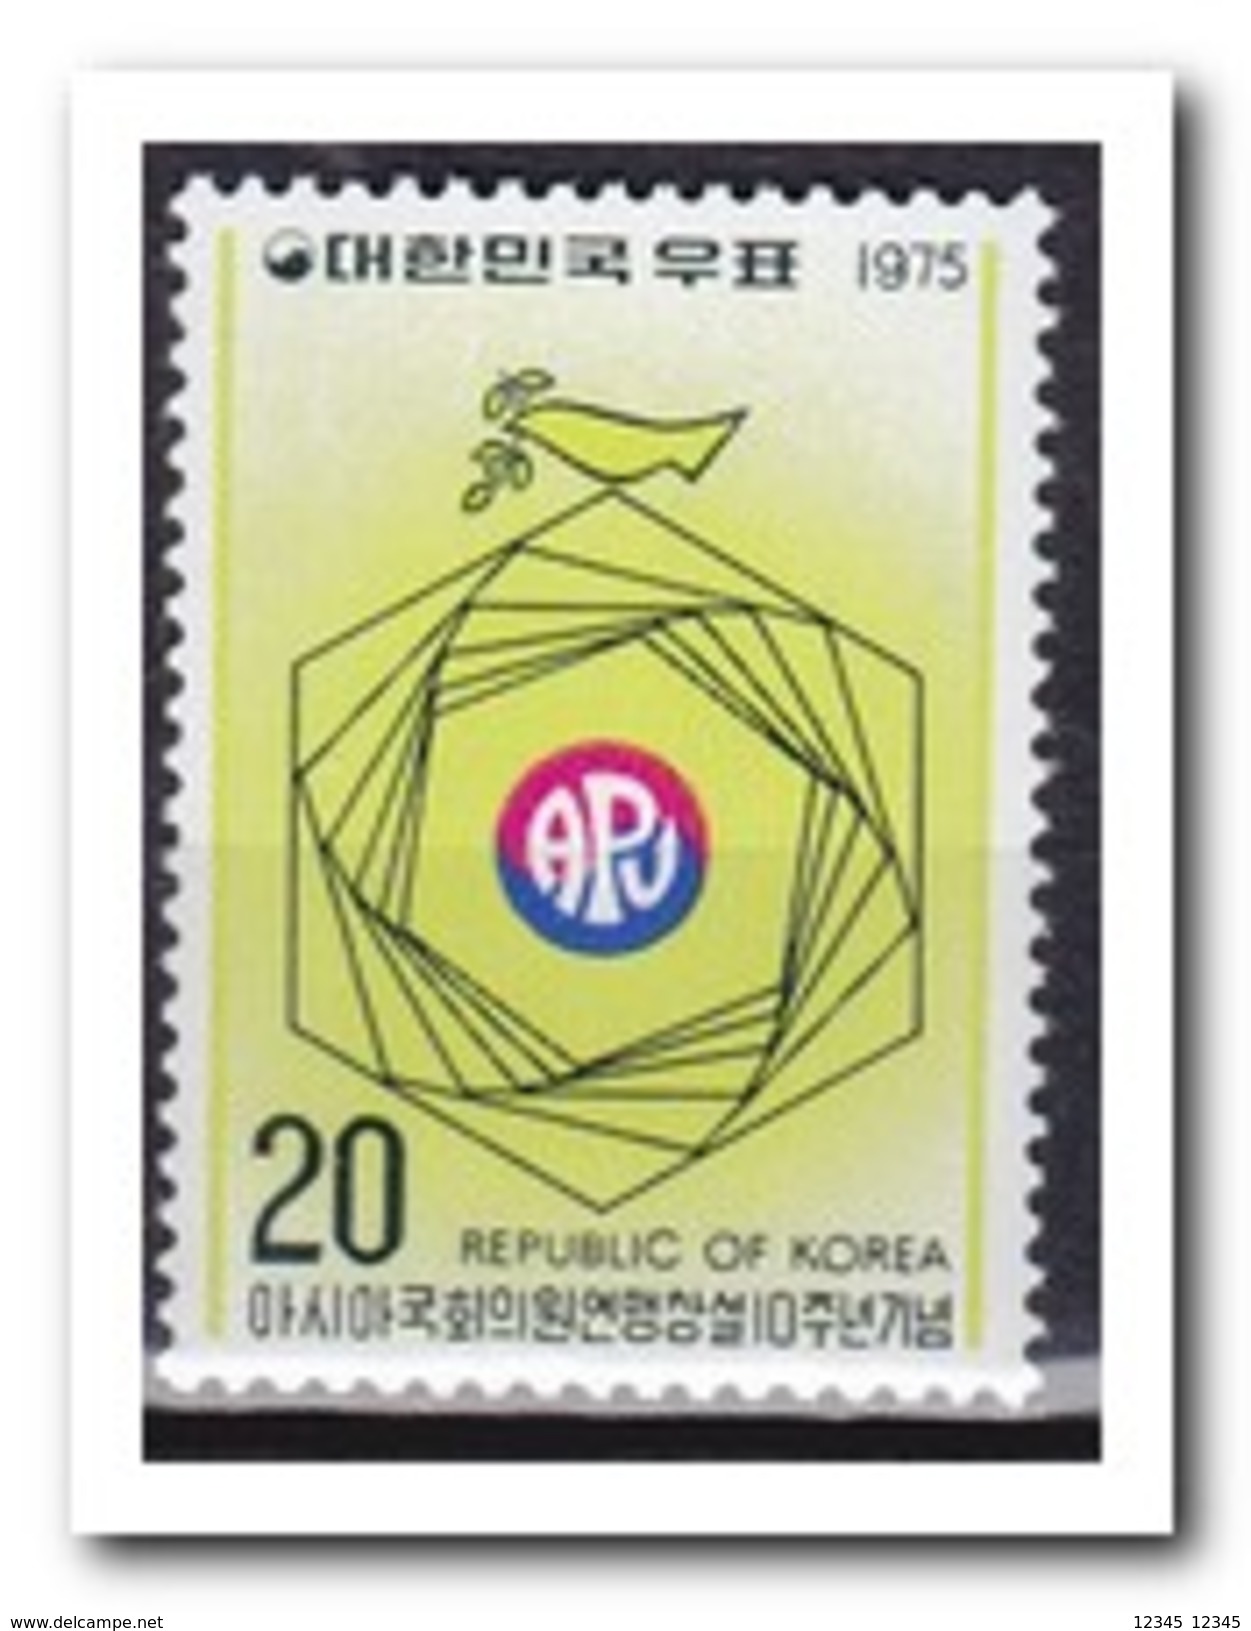 Zuid Korea 1975, Postfris MNH, APU - Korea (Zuid)